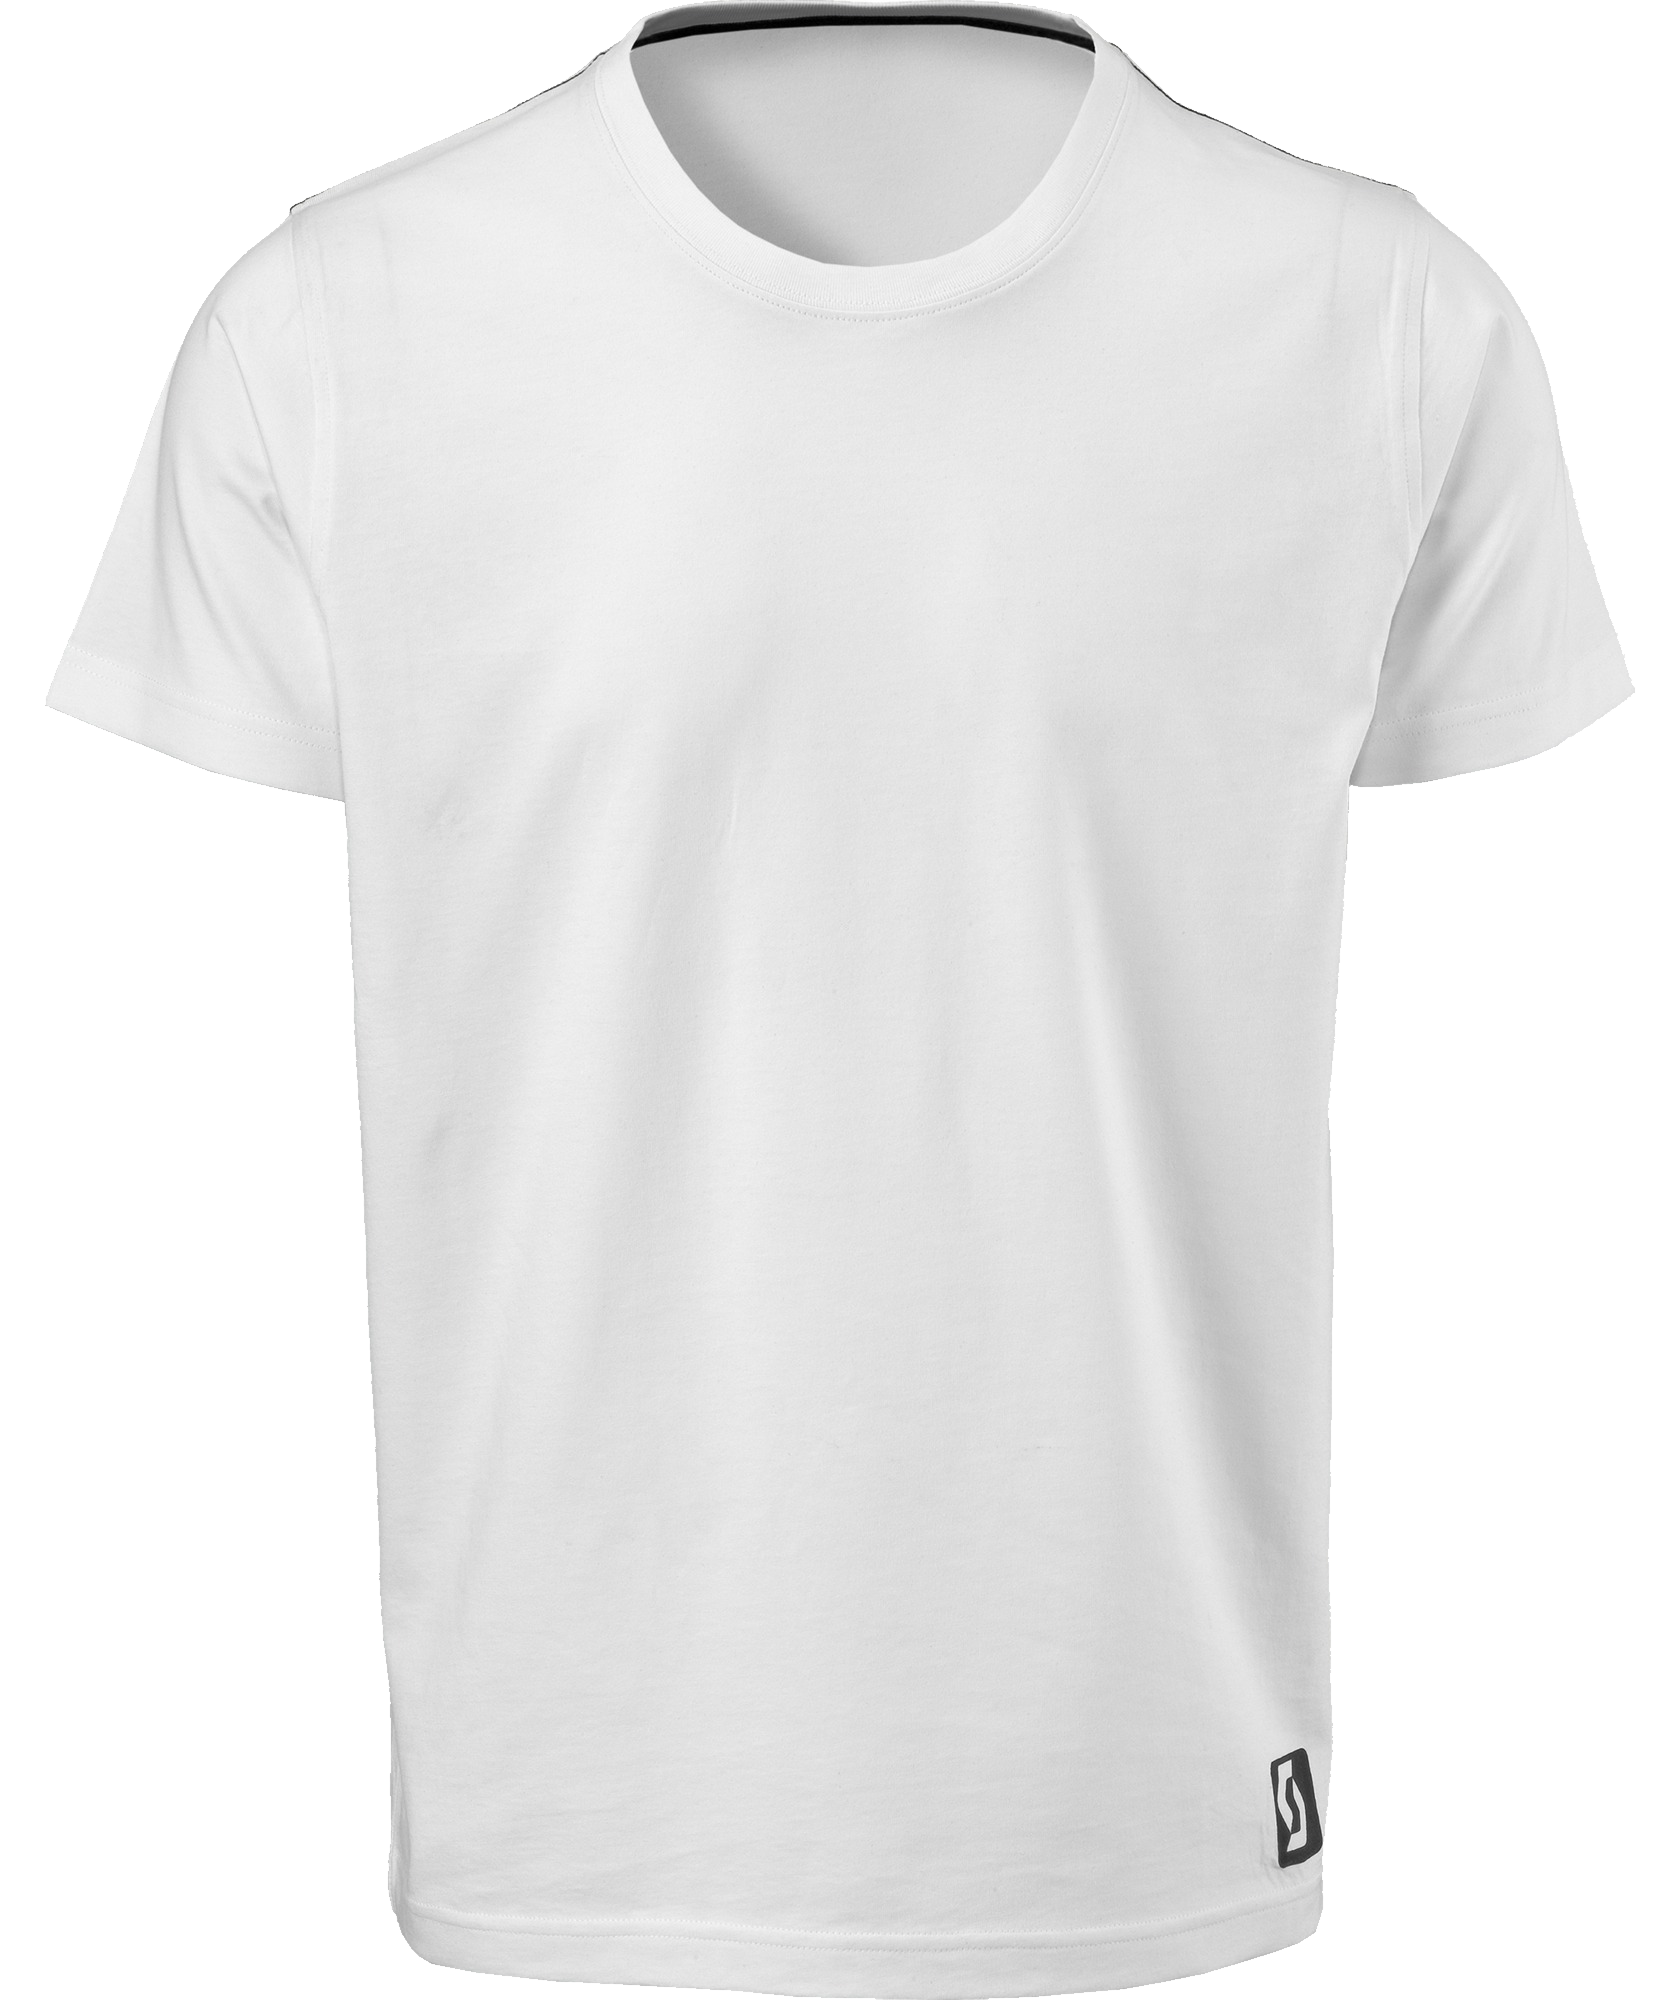 White Polo Shirt PNG Image